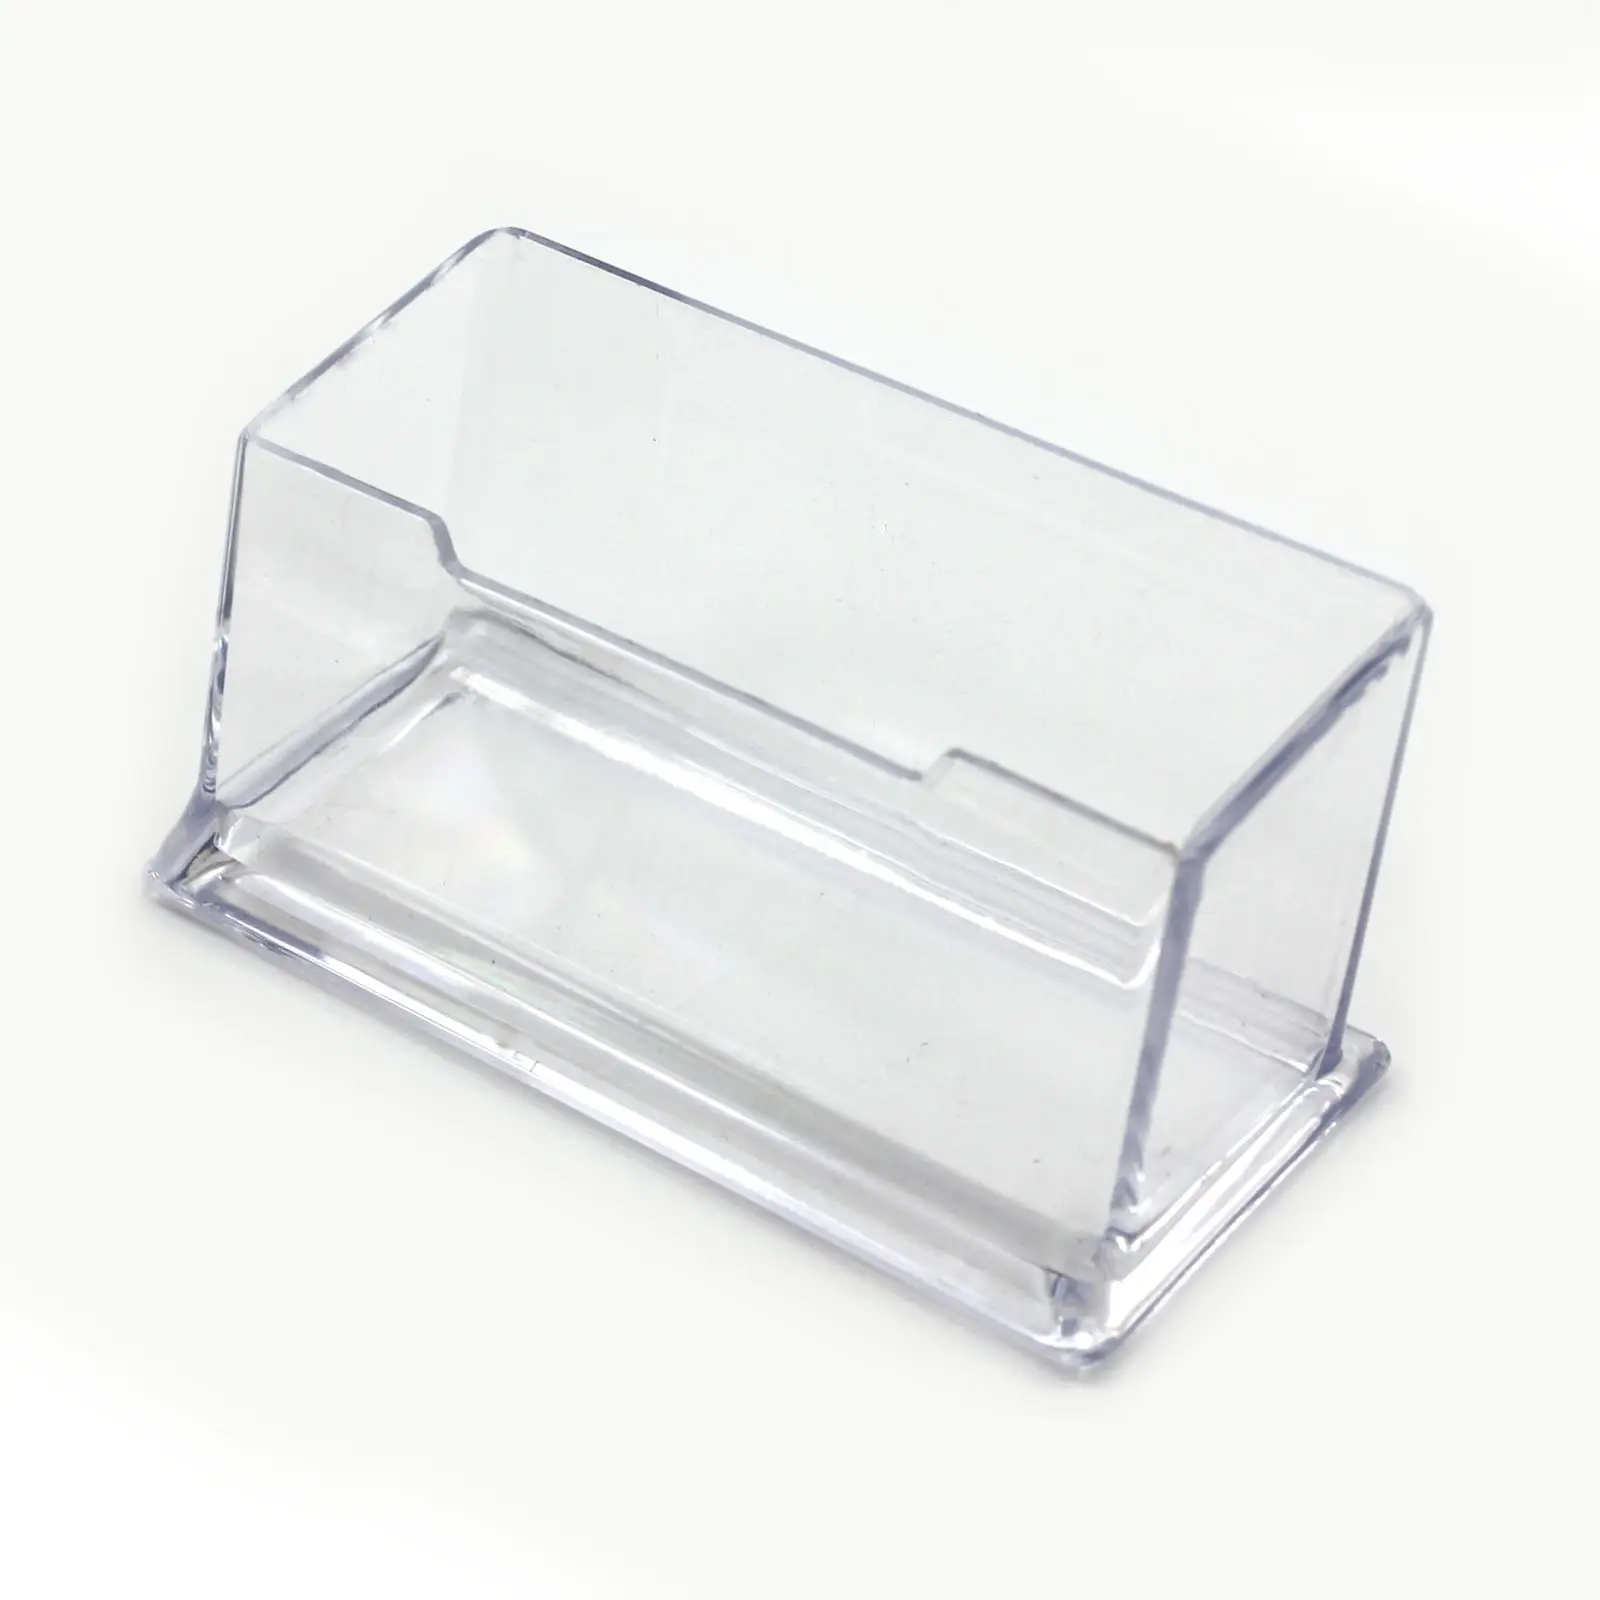 Neue Clear Desk Shelf Box Aufbewahrung Display Stand Acryl Kunststoff transparent Desktop Visitenkarte halter